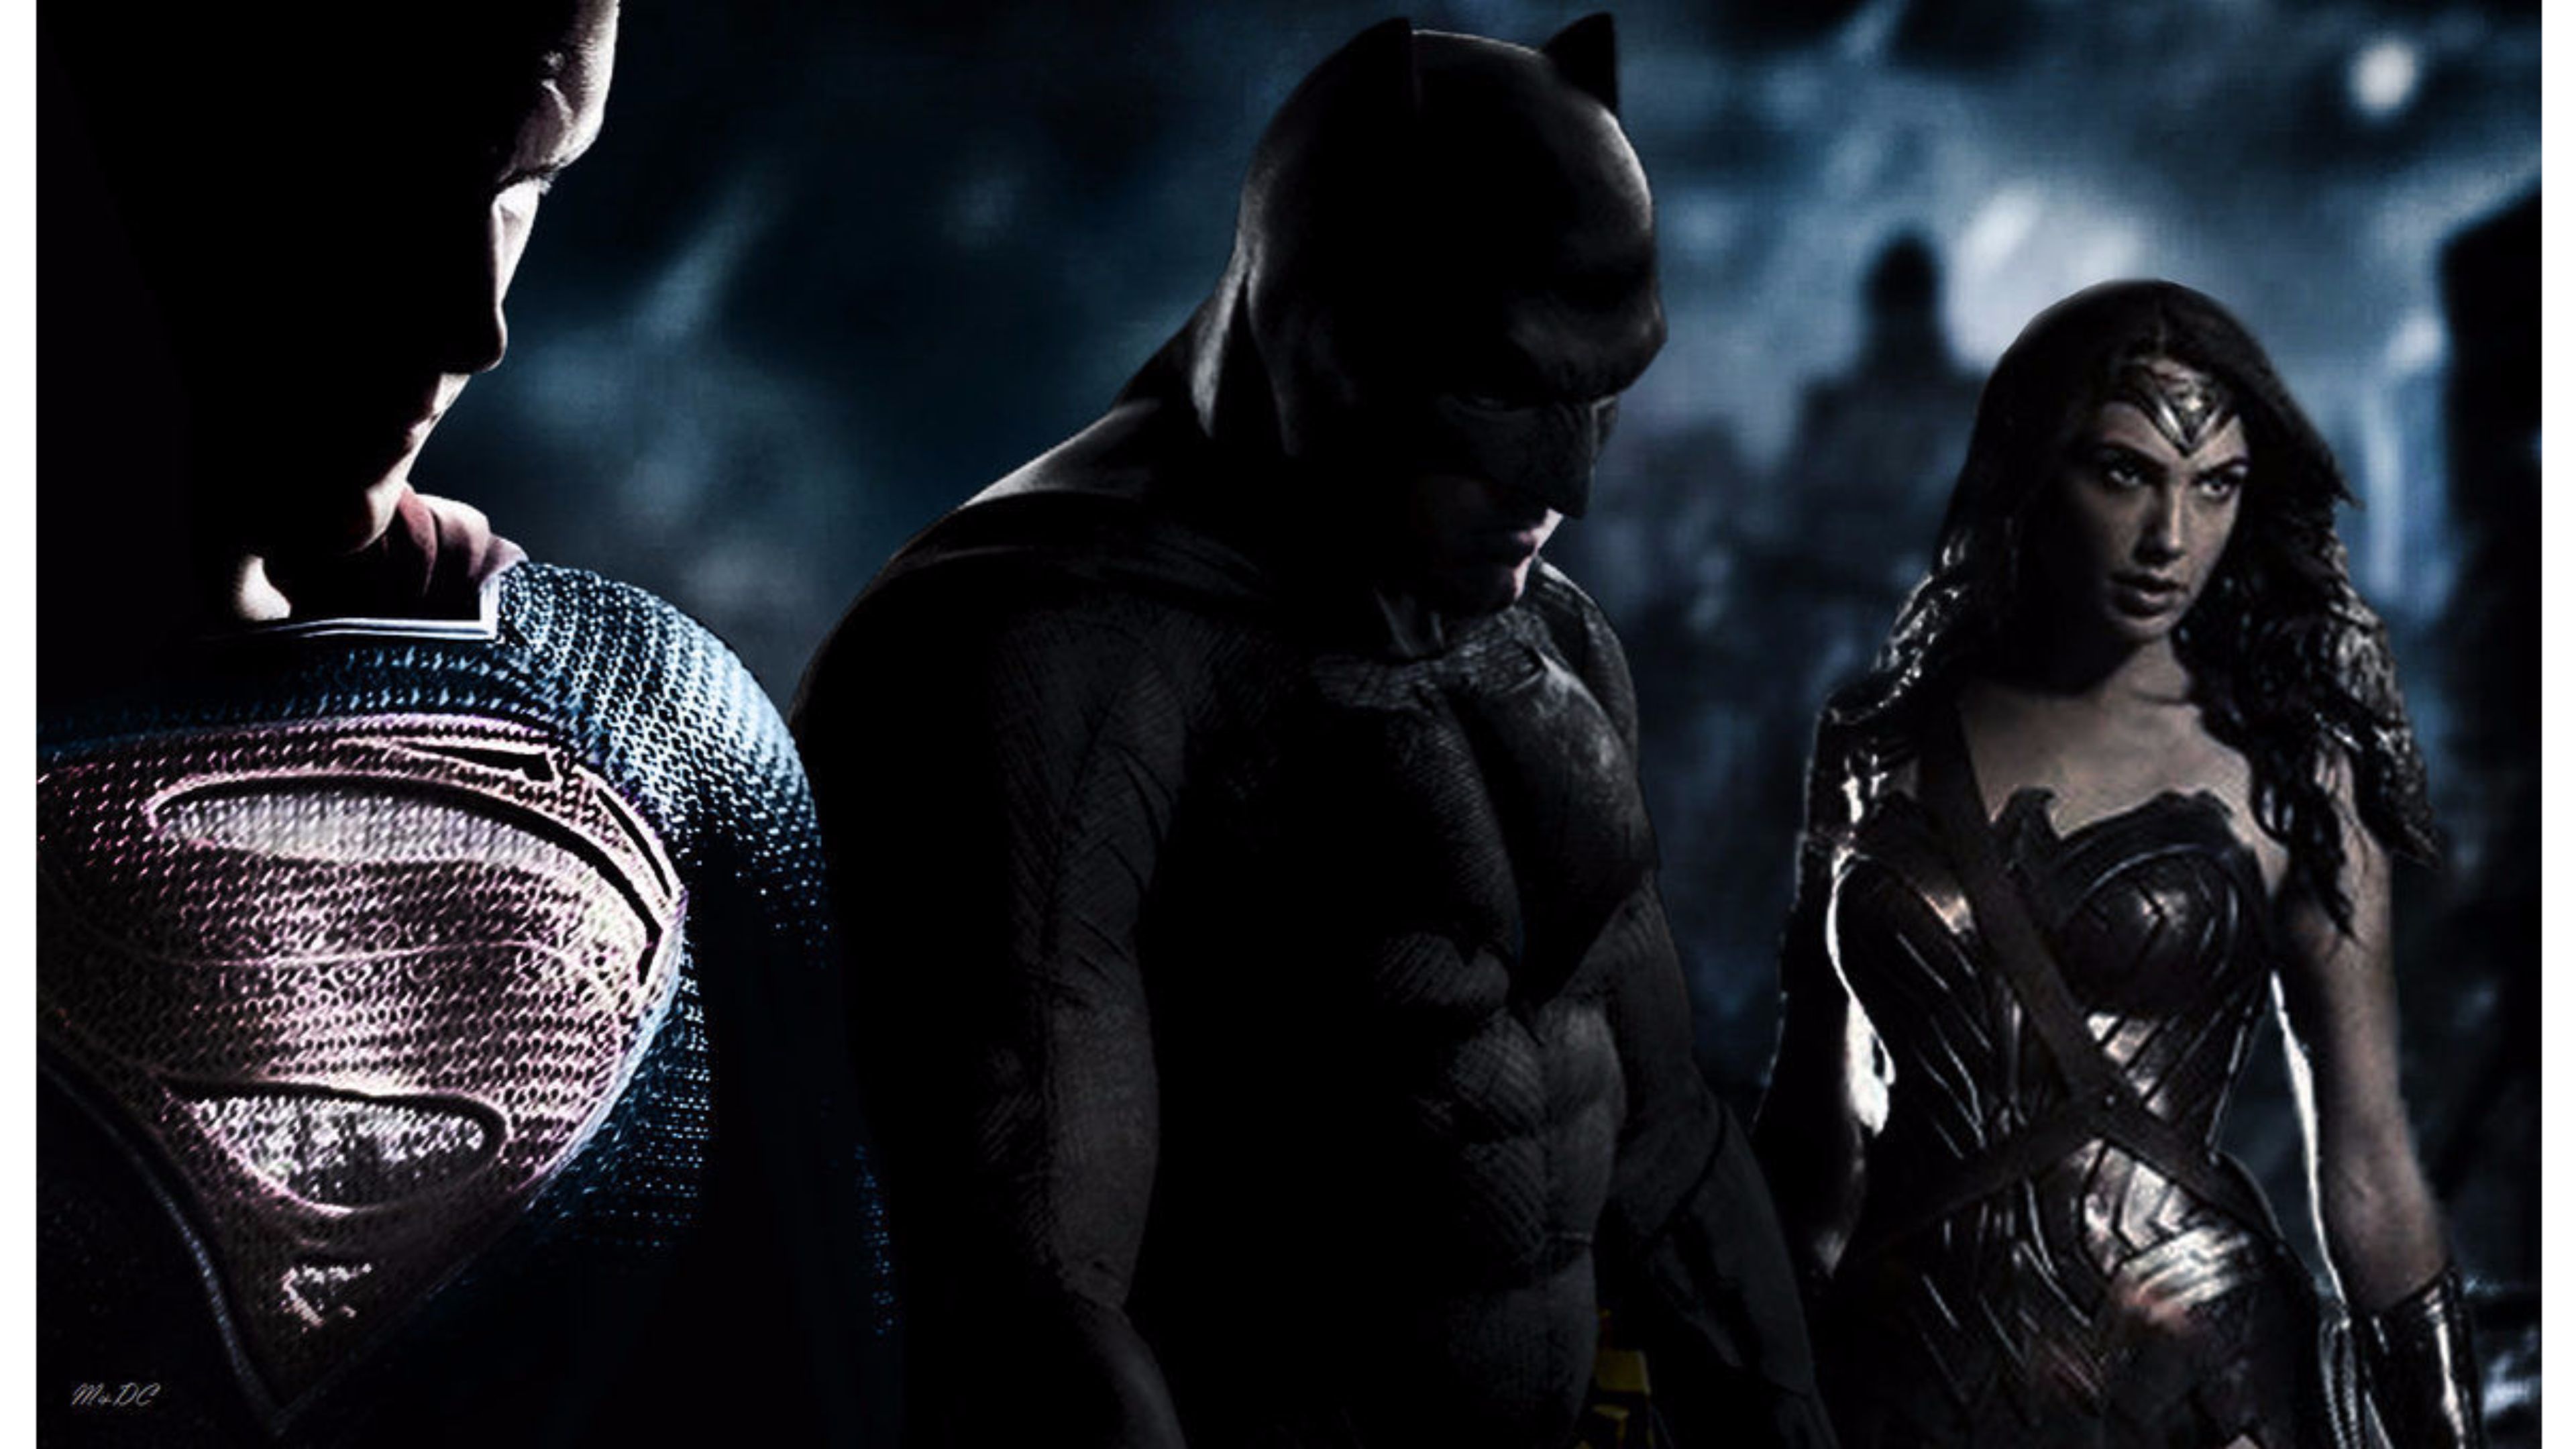 batman vs superman wallpaper 4k,darkness,batman,human,fictional character,movie